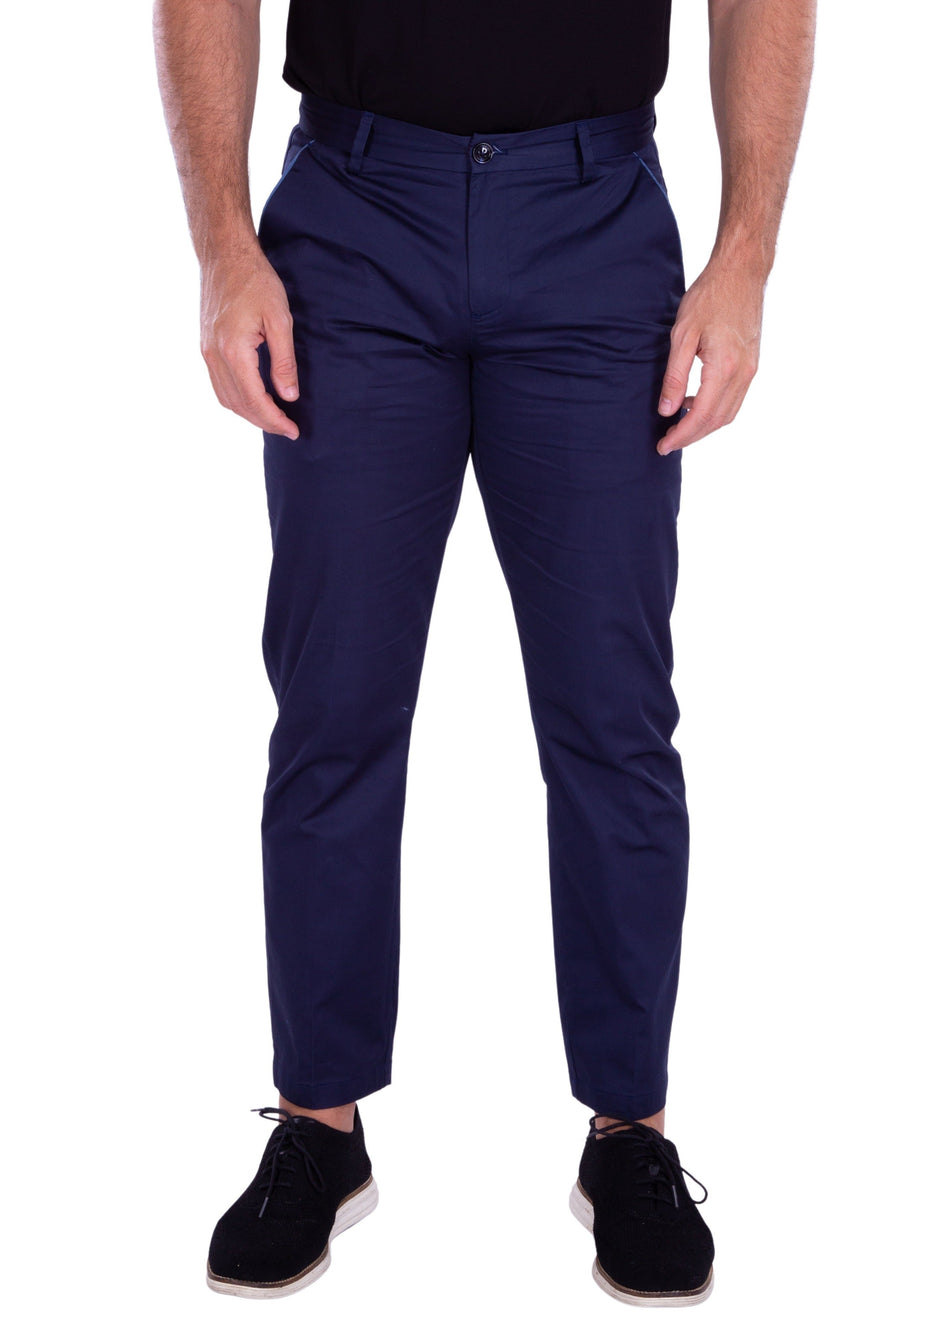 BESPOKE - Navy Pants for Men - 183122 - www.– BESPOKE MODA